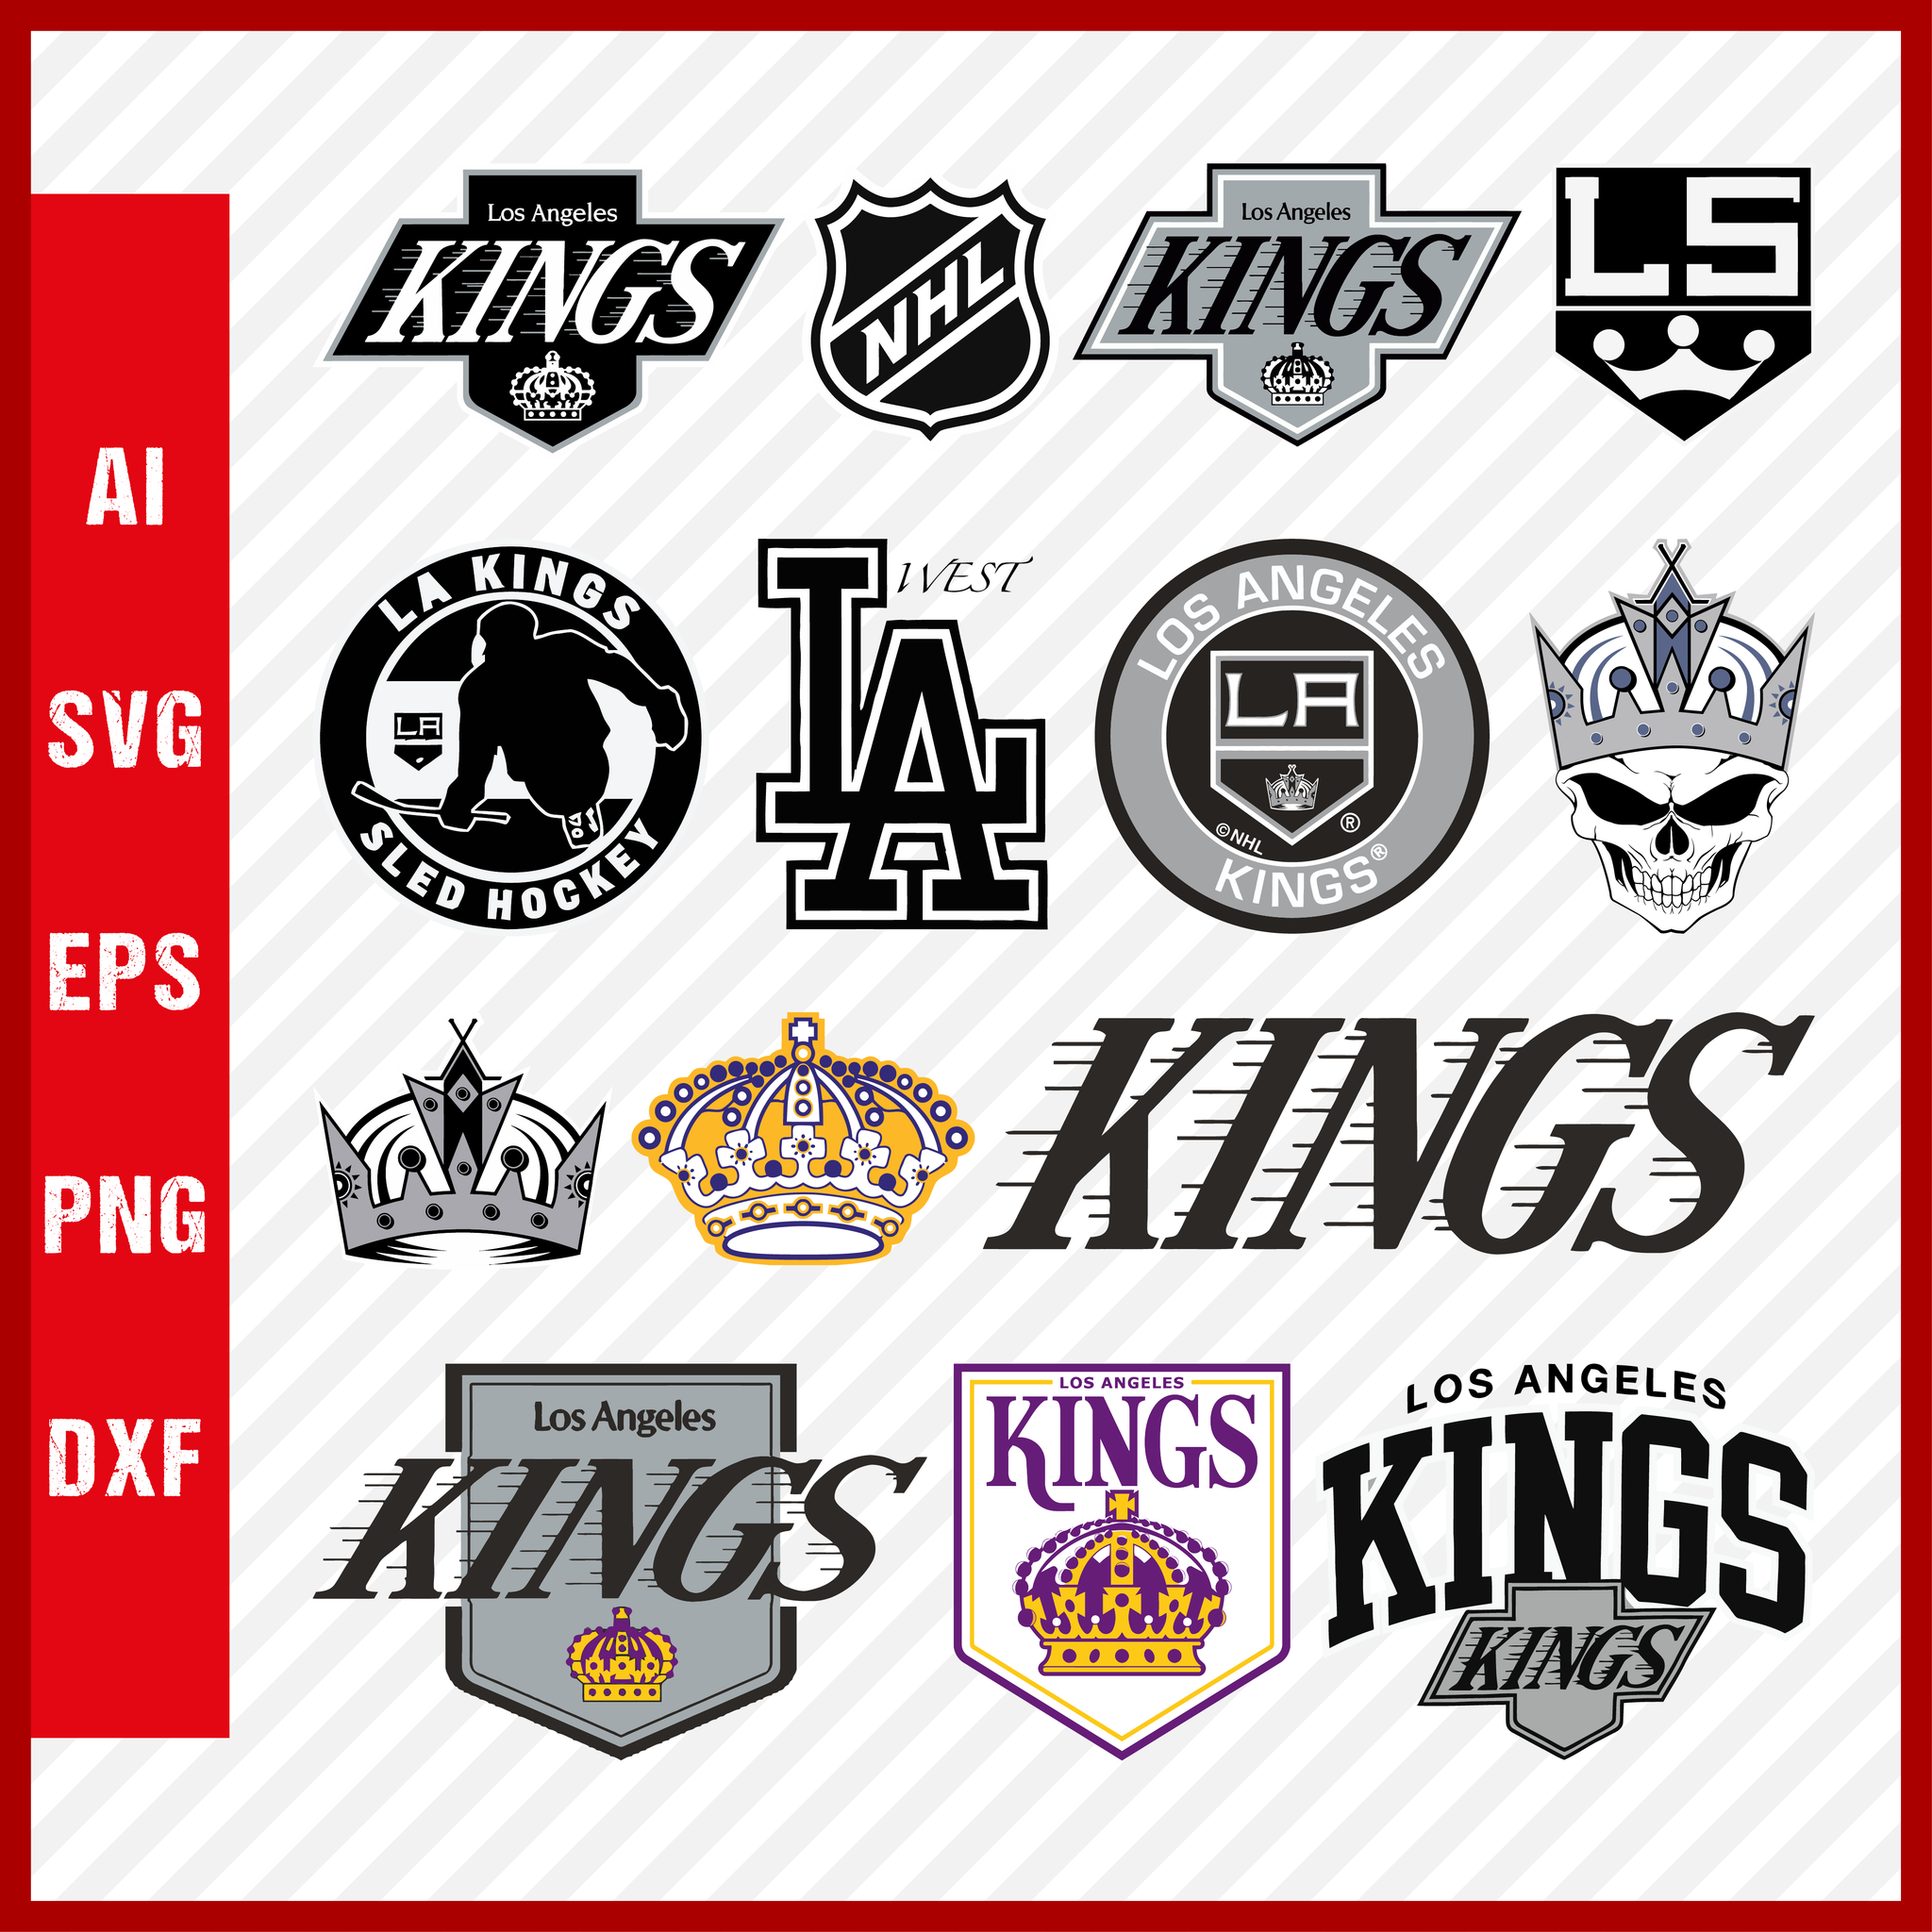 Los Angeles Kings Primary Logo - National Hockey League (NHL